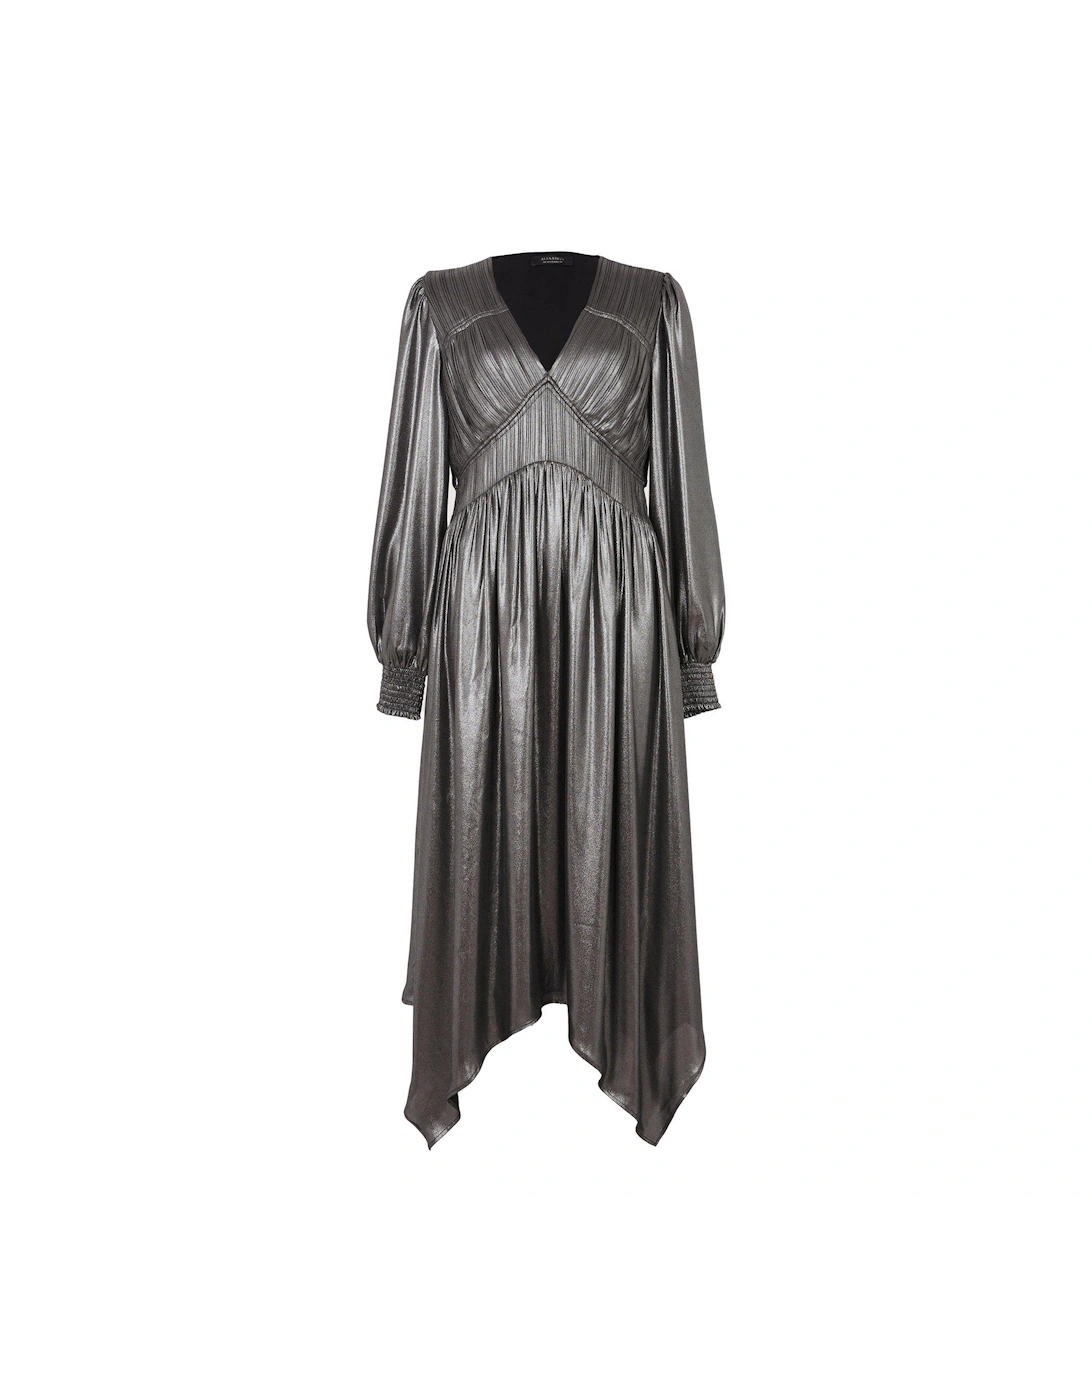 Estelle Metallic Dress - Gunmetal Grey